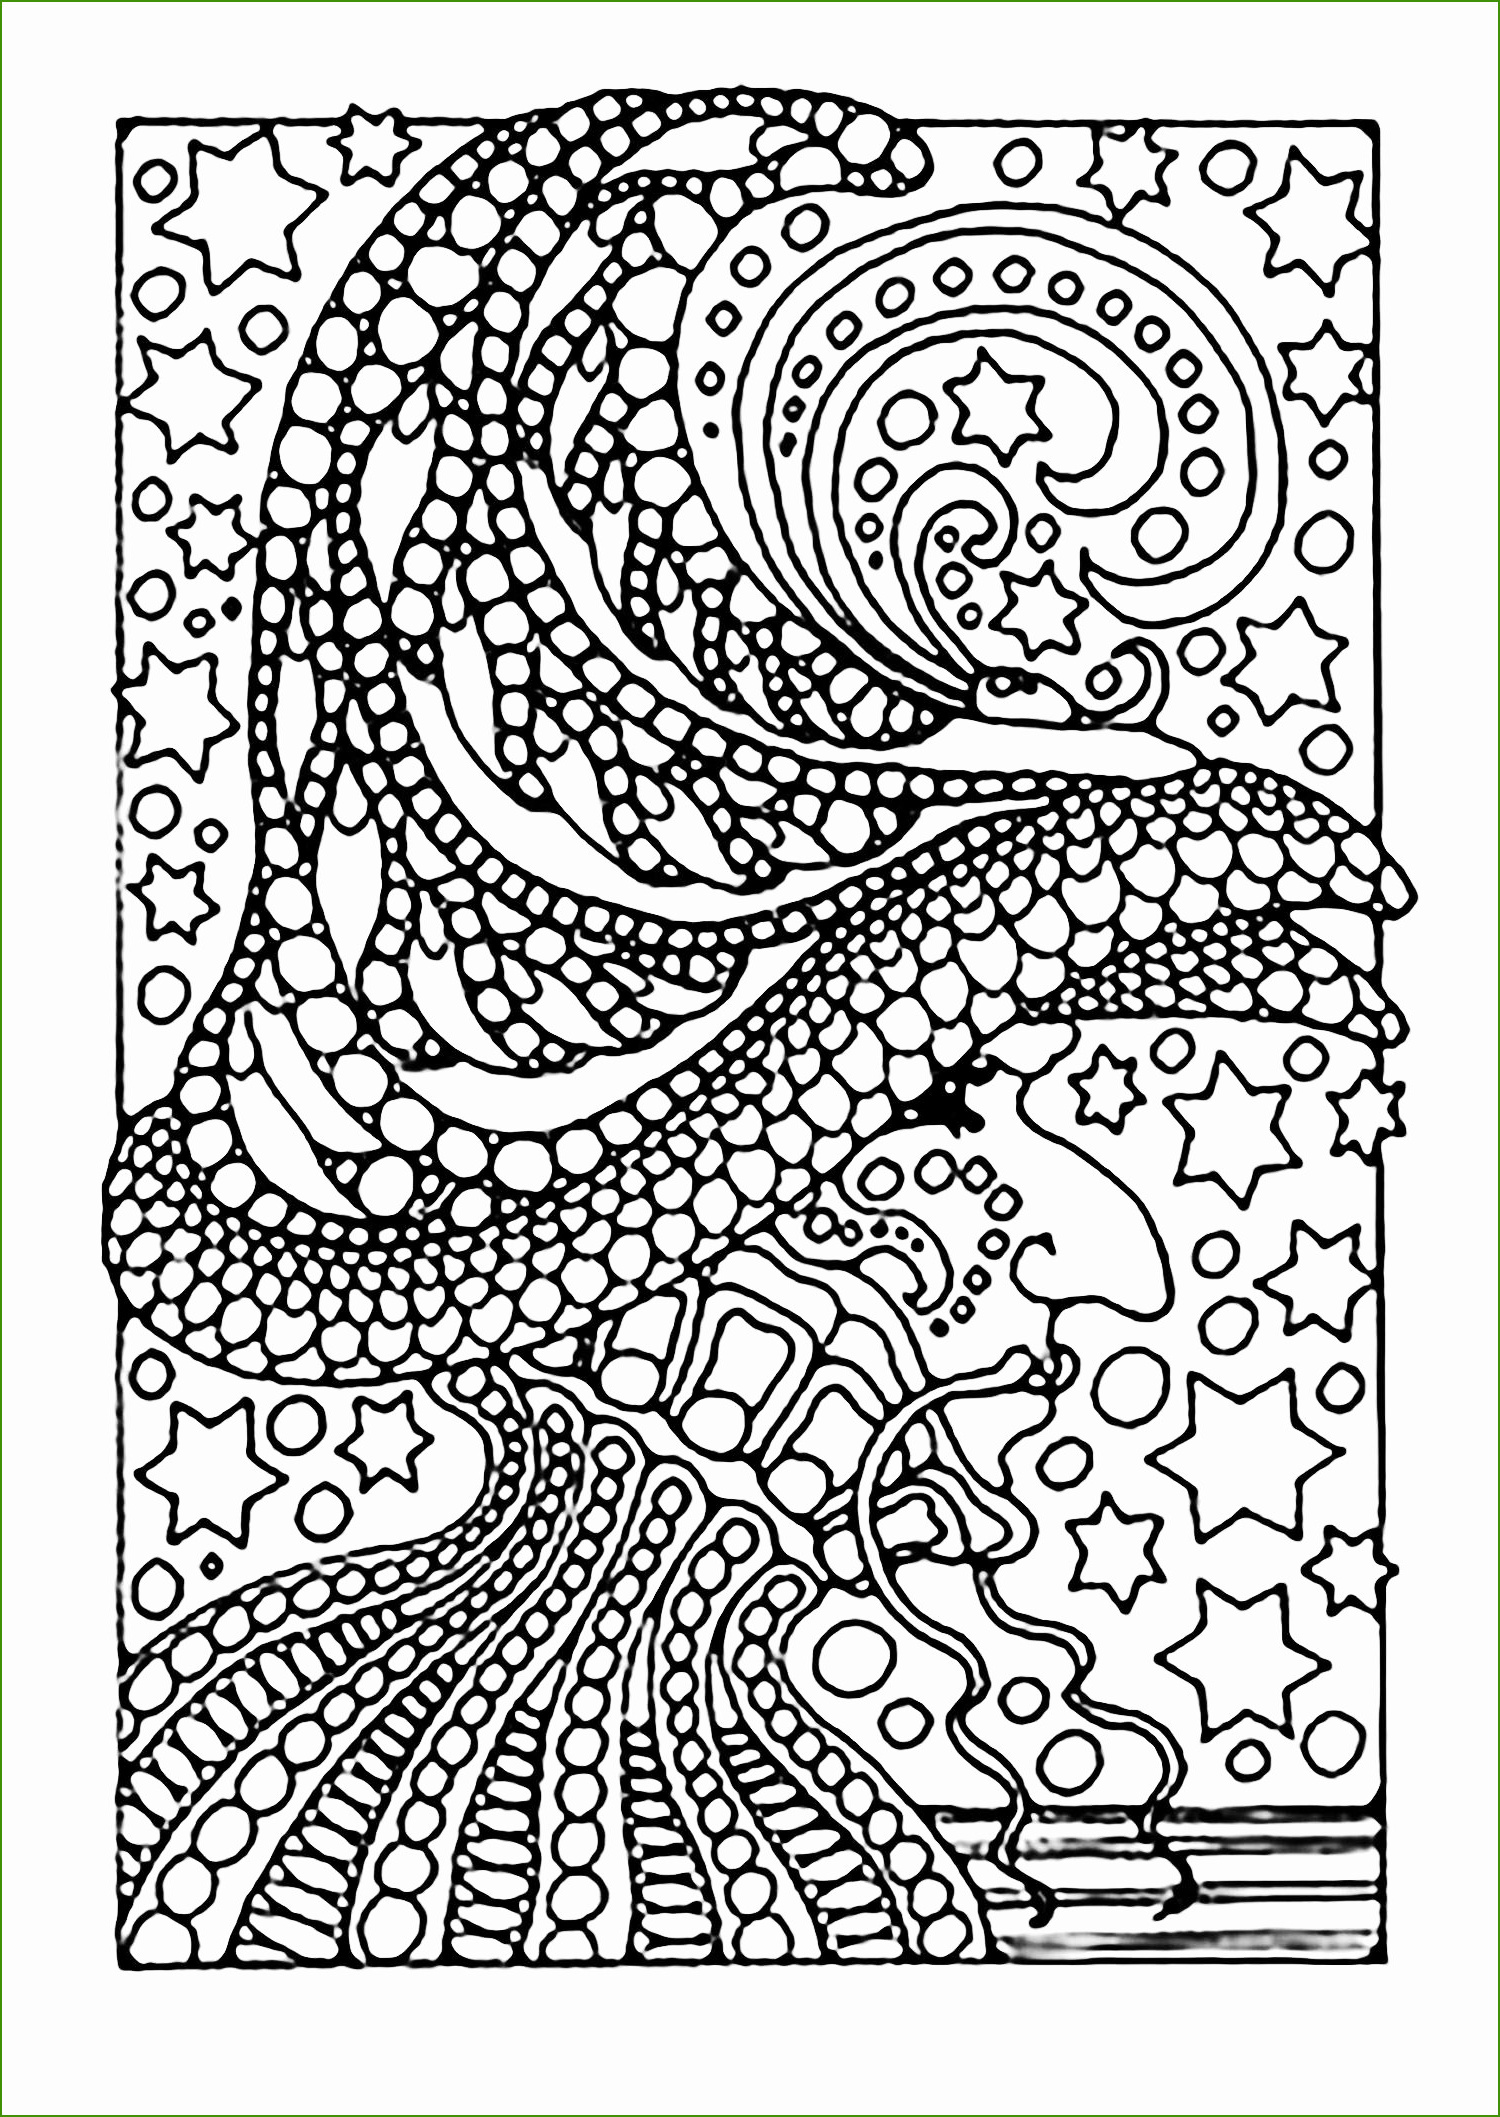 coloriage stitch et angel sensationnel elephant coloring pages collection thephotosync